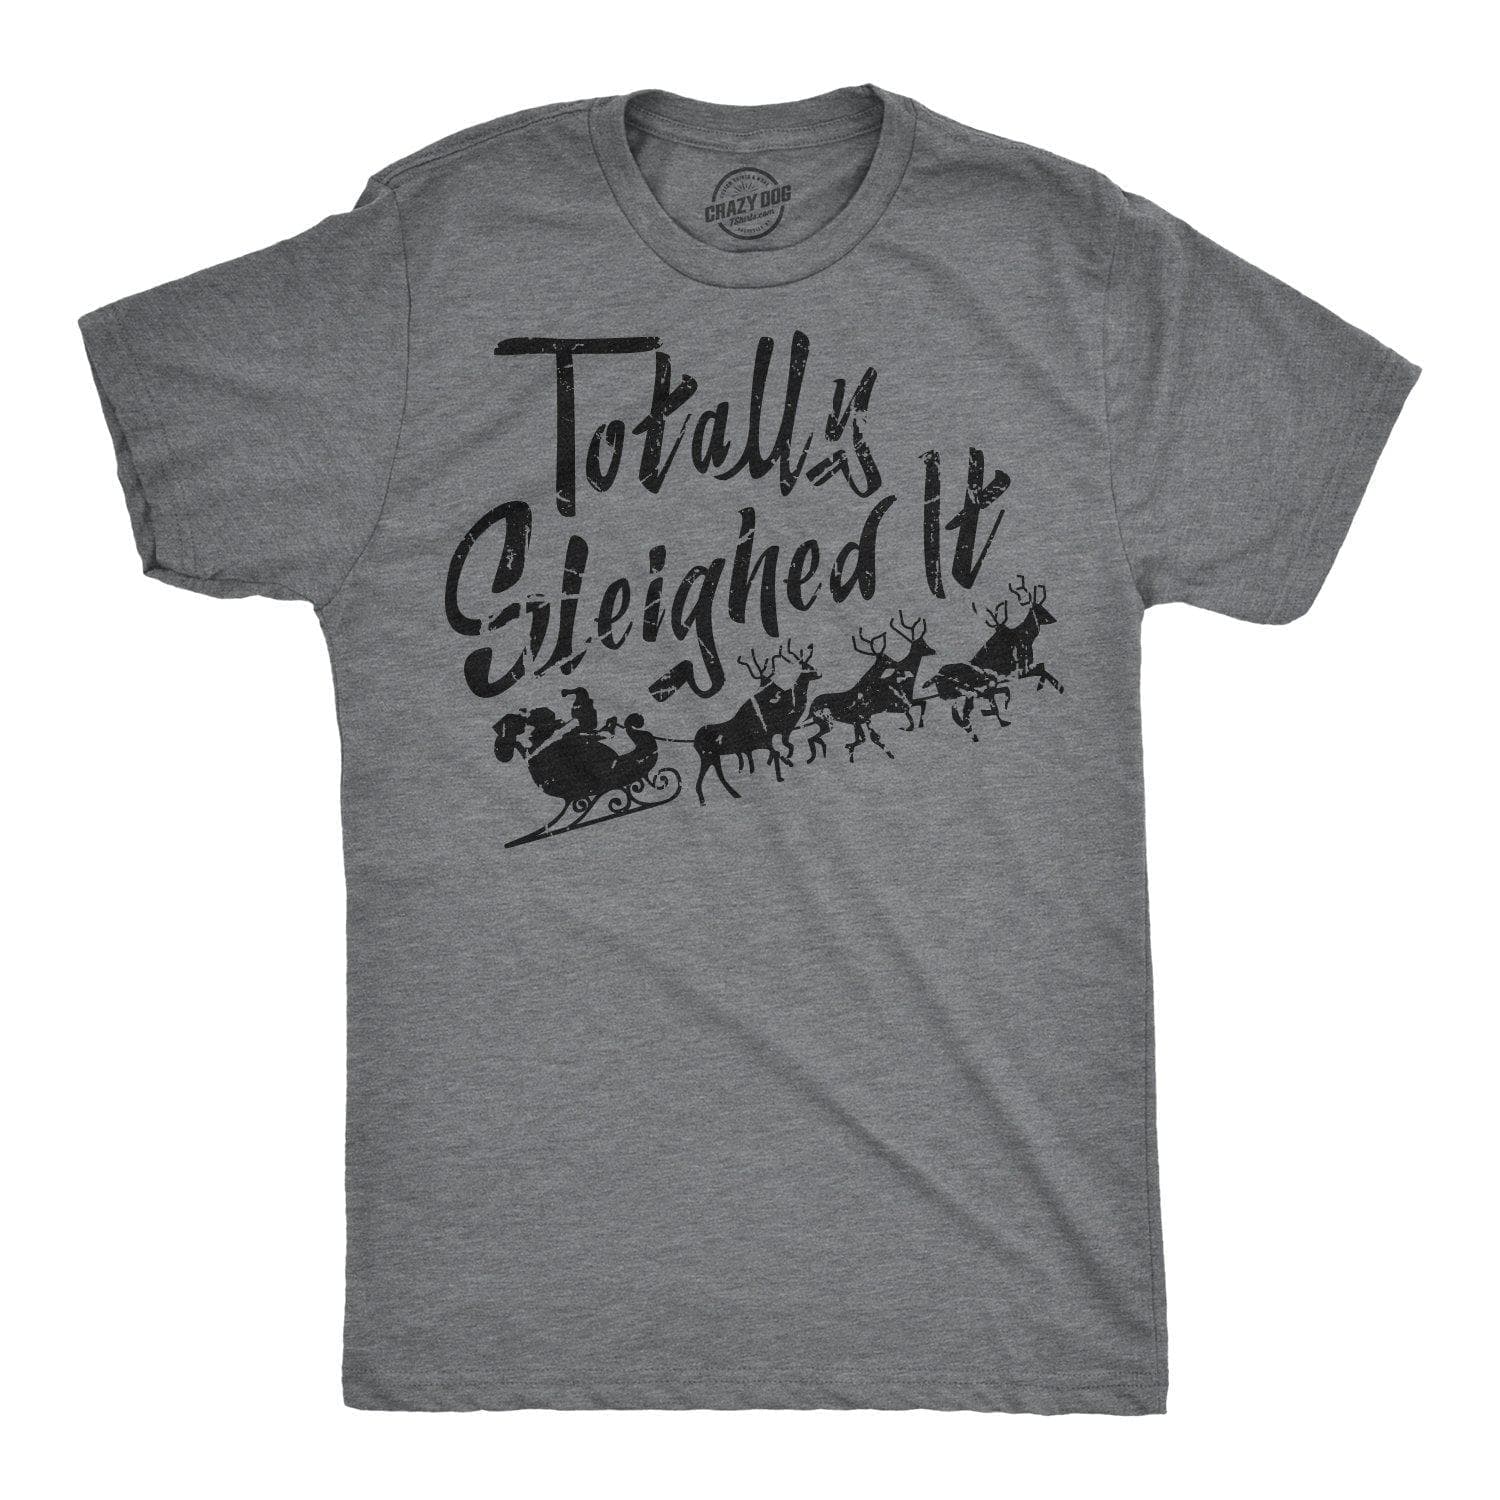 Sleighed It Men's Tshirt - Crazy Dog T-Shirts